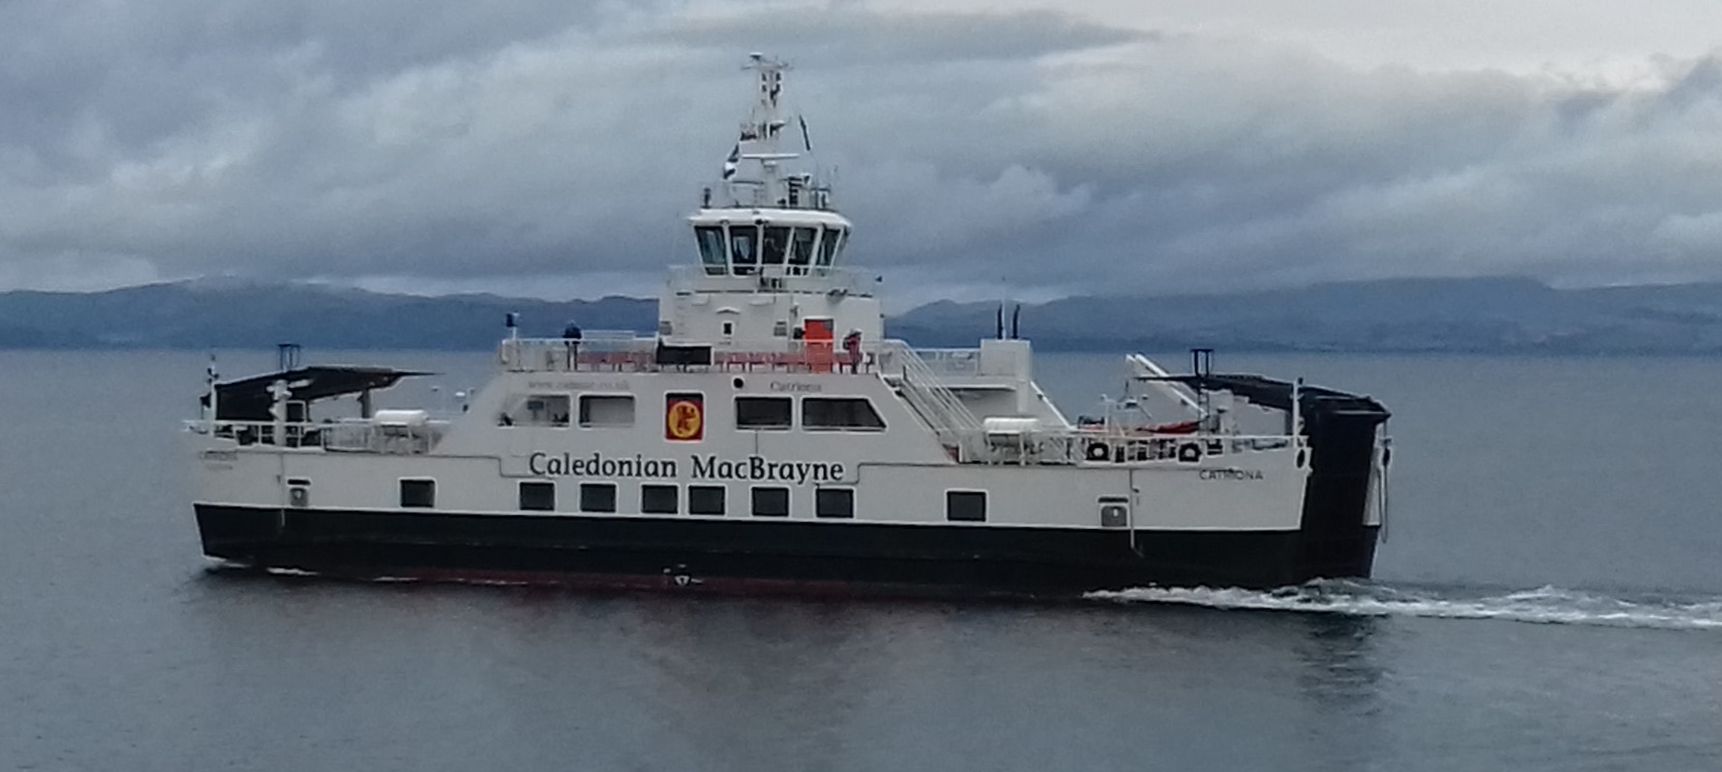 Caledonian MacBrayne Arran ferry "Catriona"